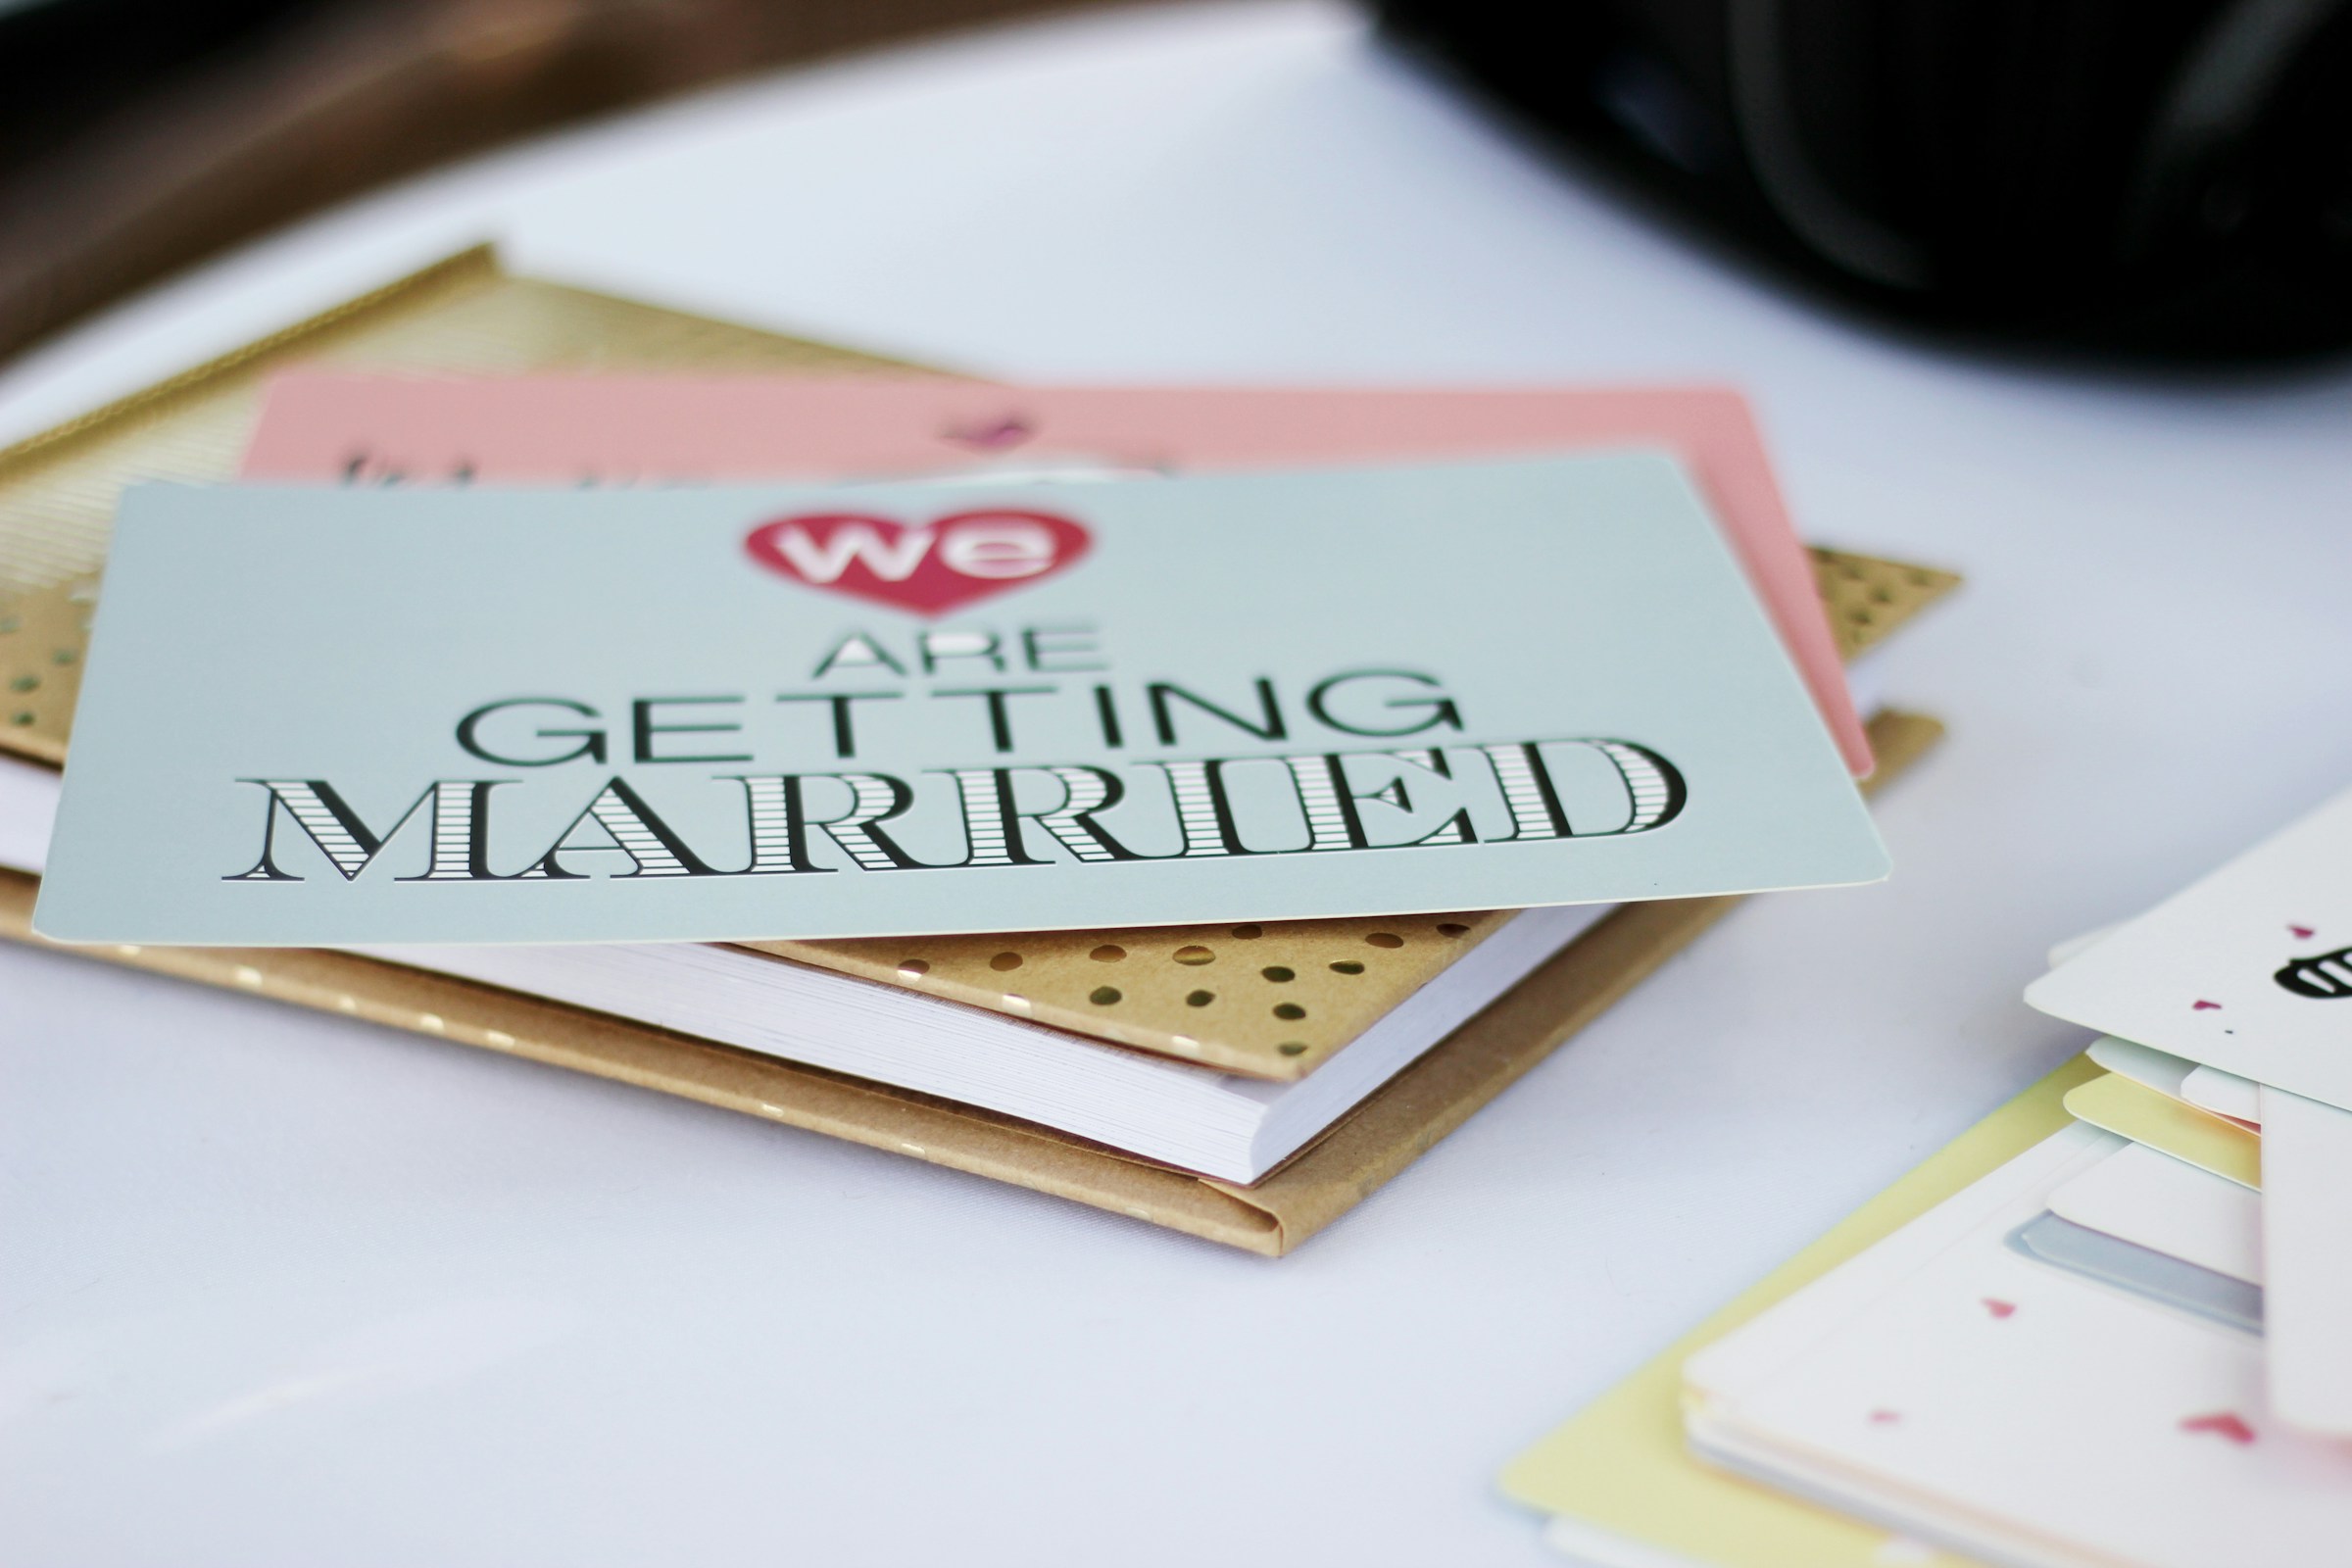 A wedding invitation card | Source: Unsplash